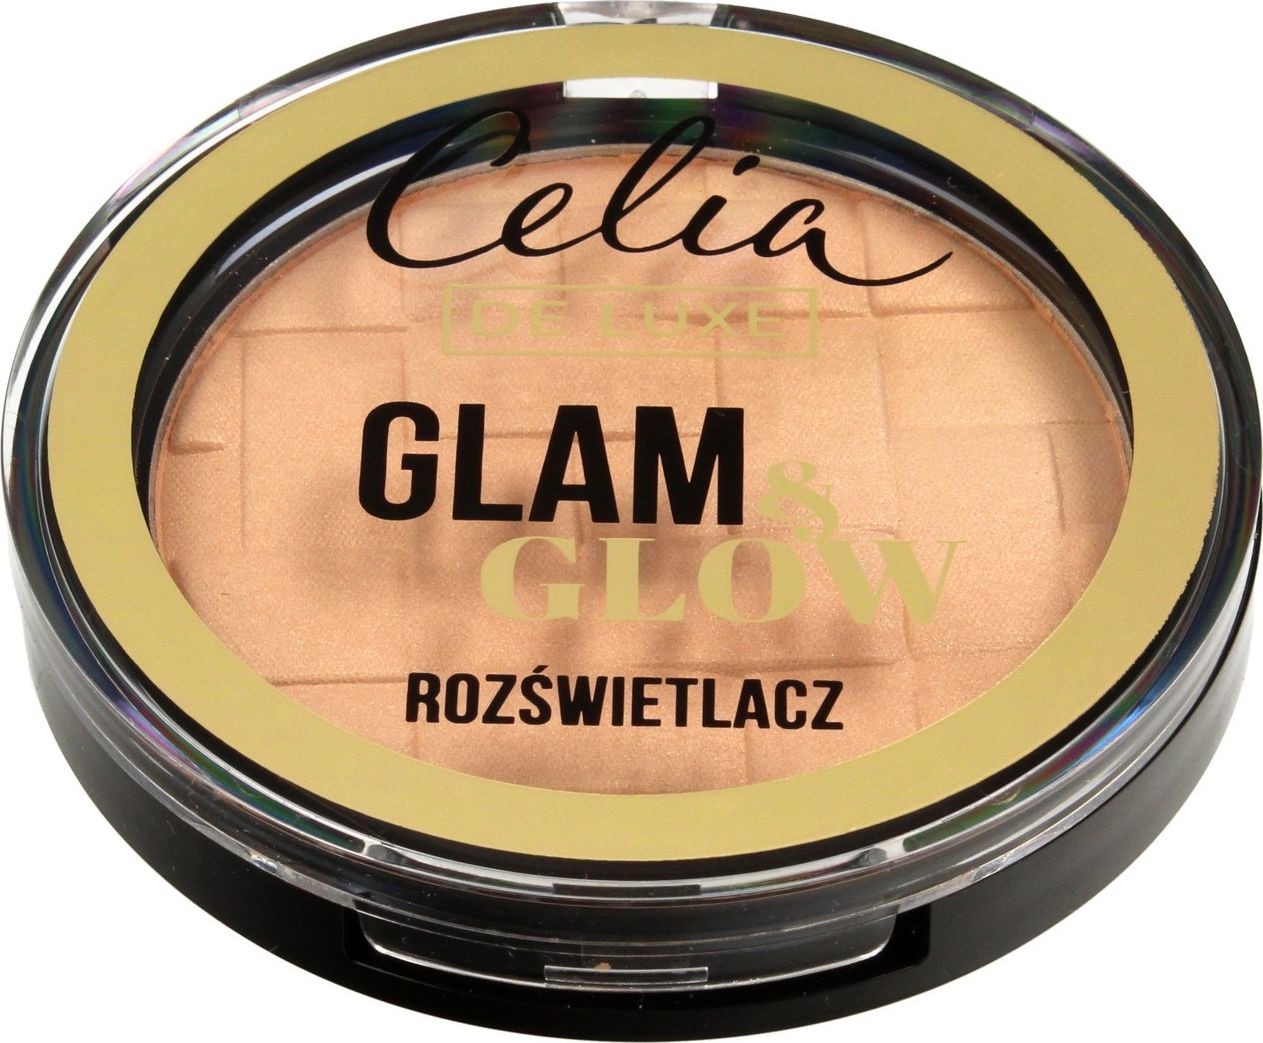 Celia Glam & Glow iluminator nr. 106 zloți 9g